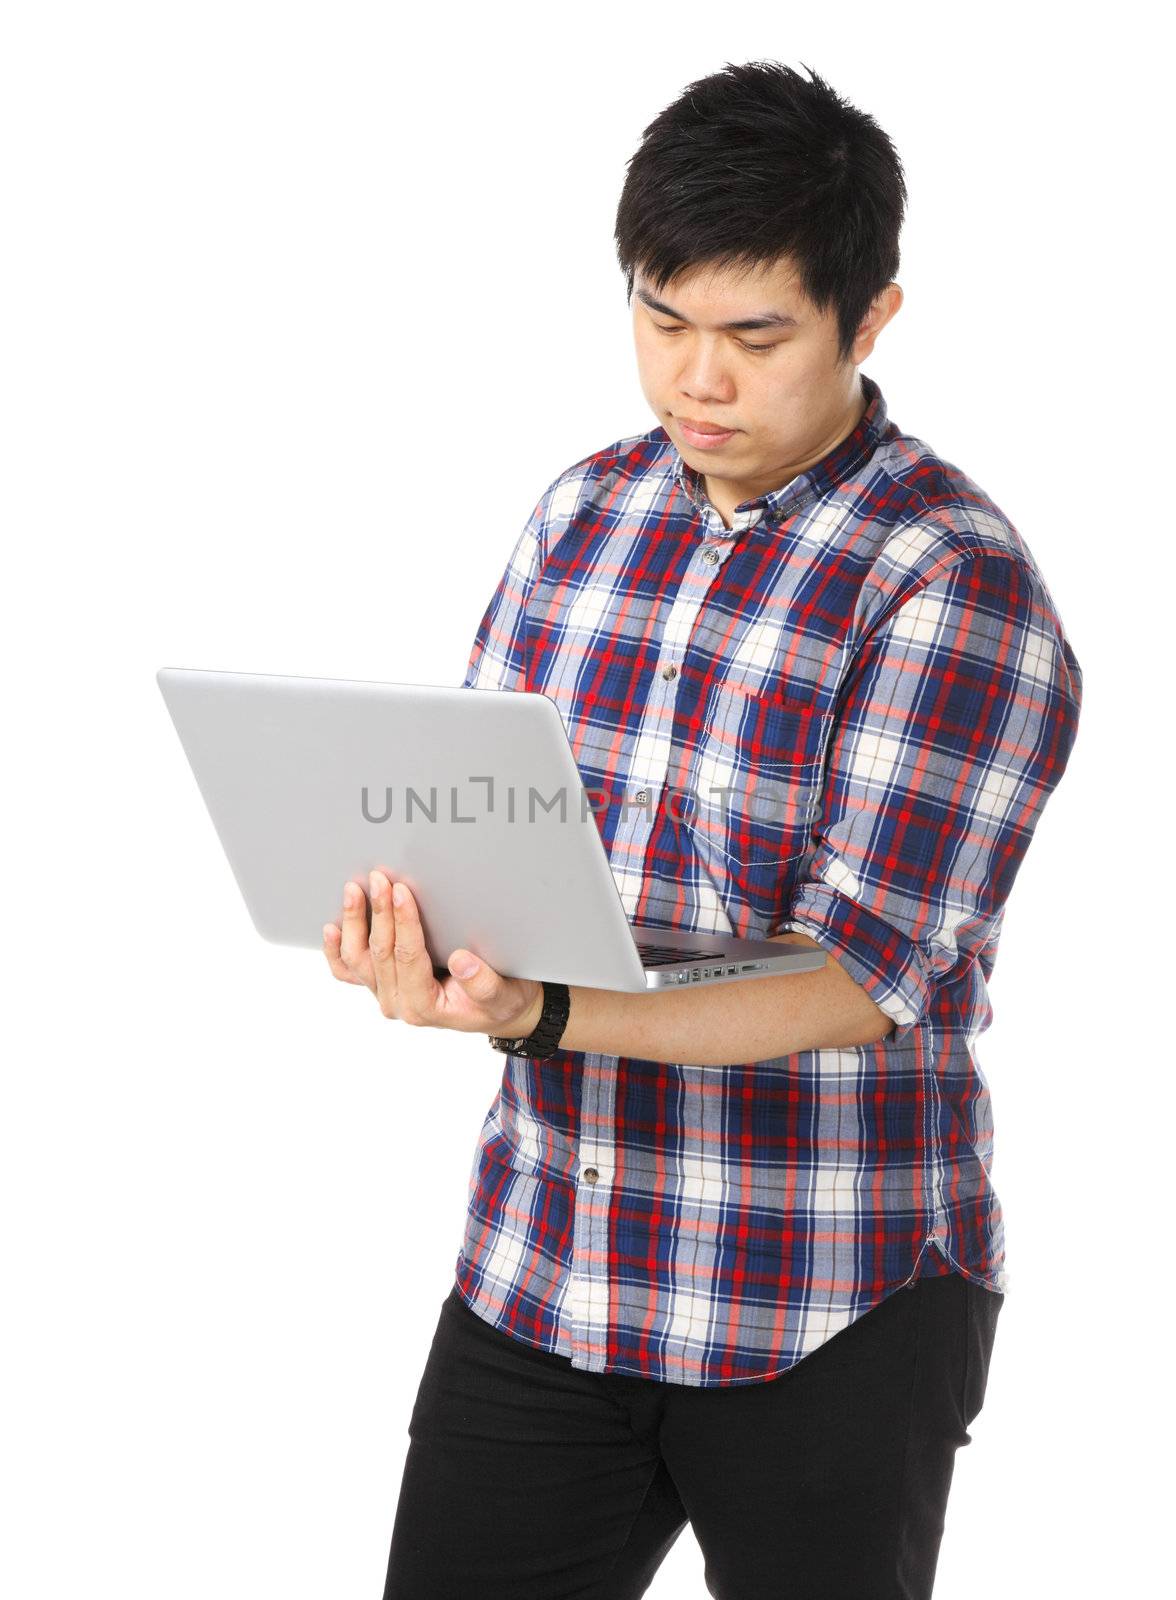 Young asian man using computer